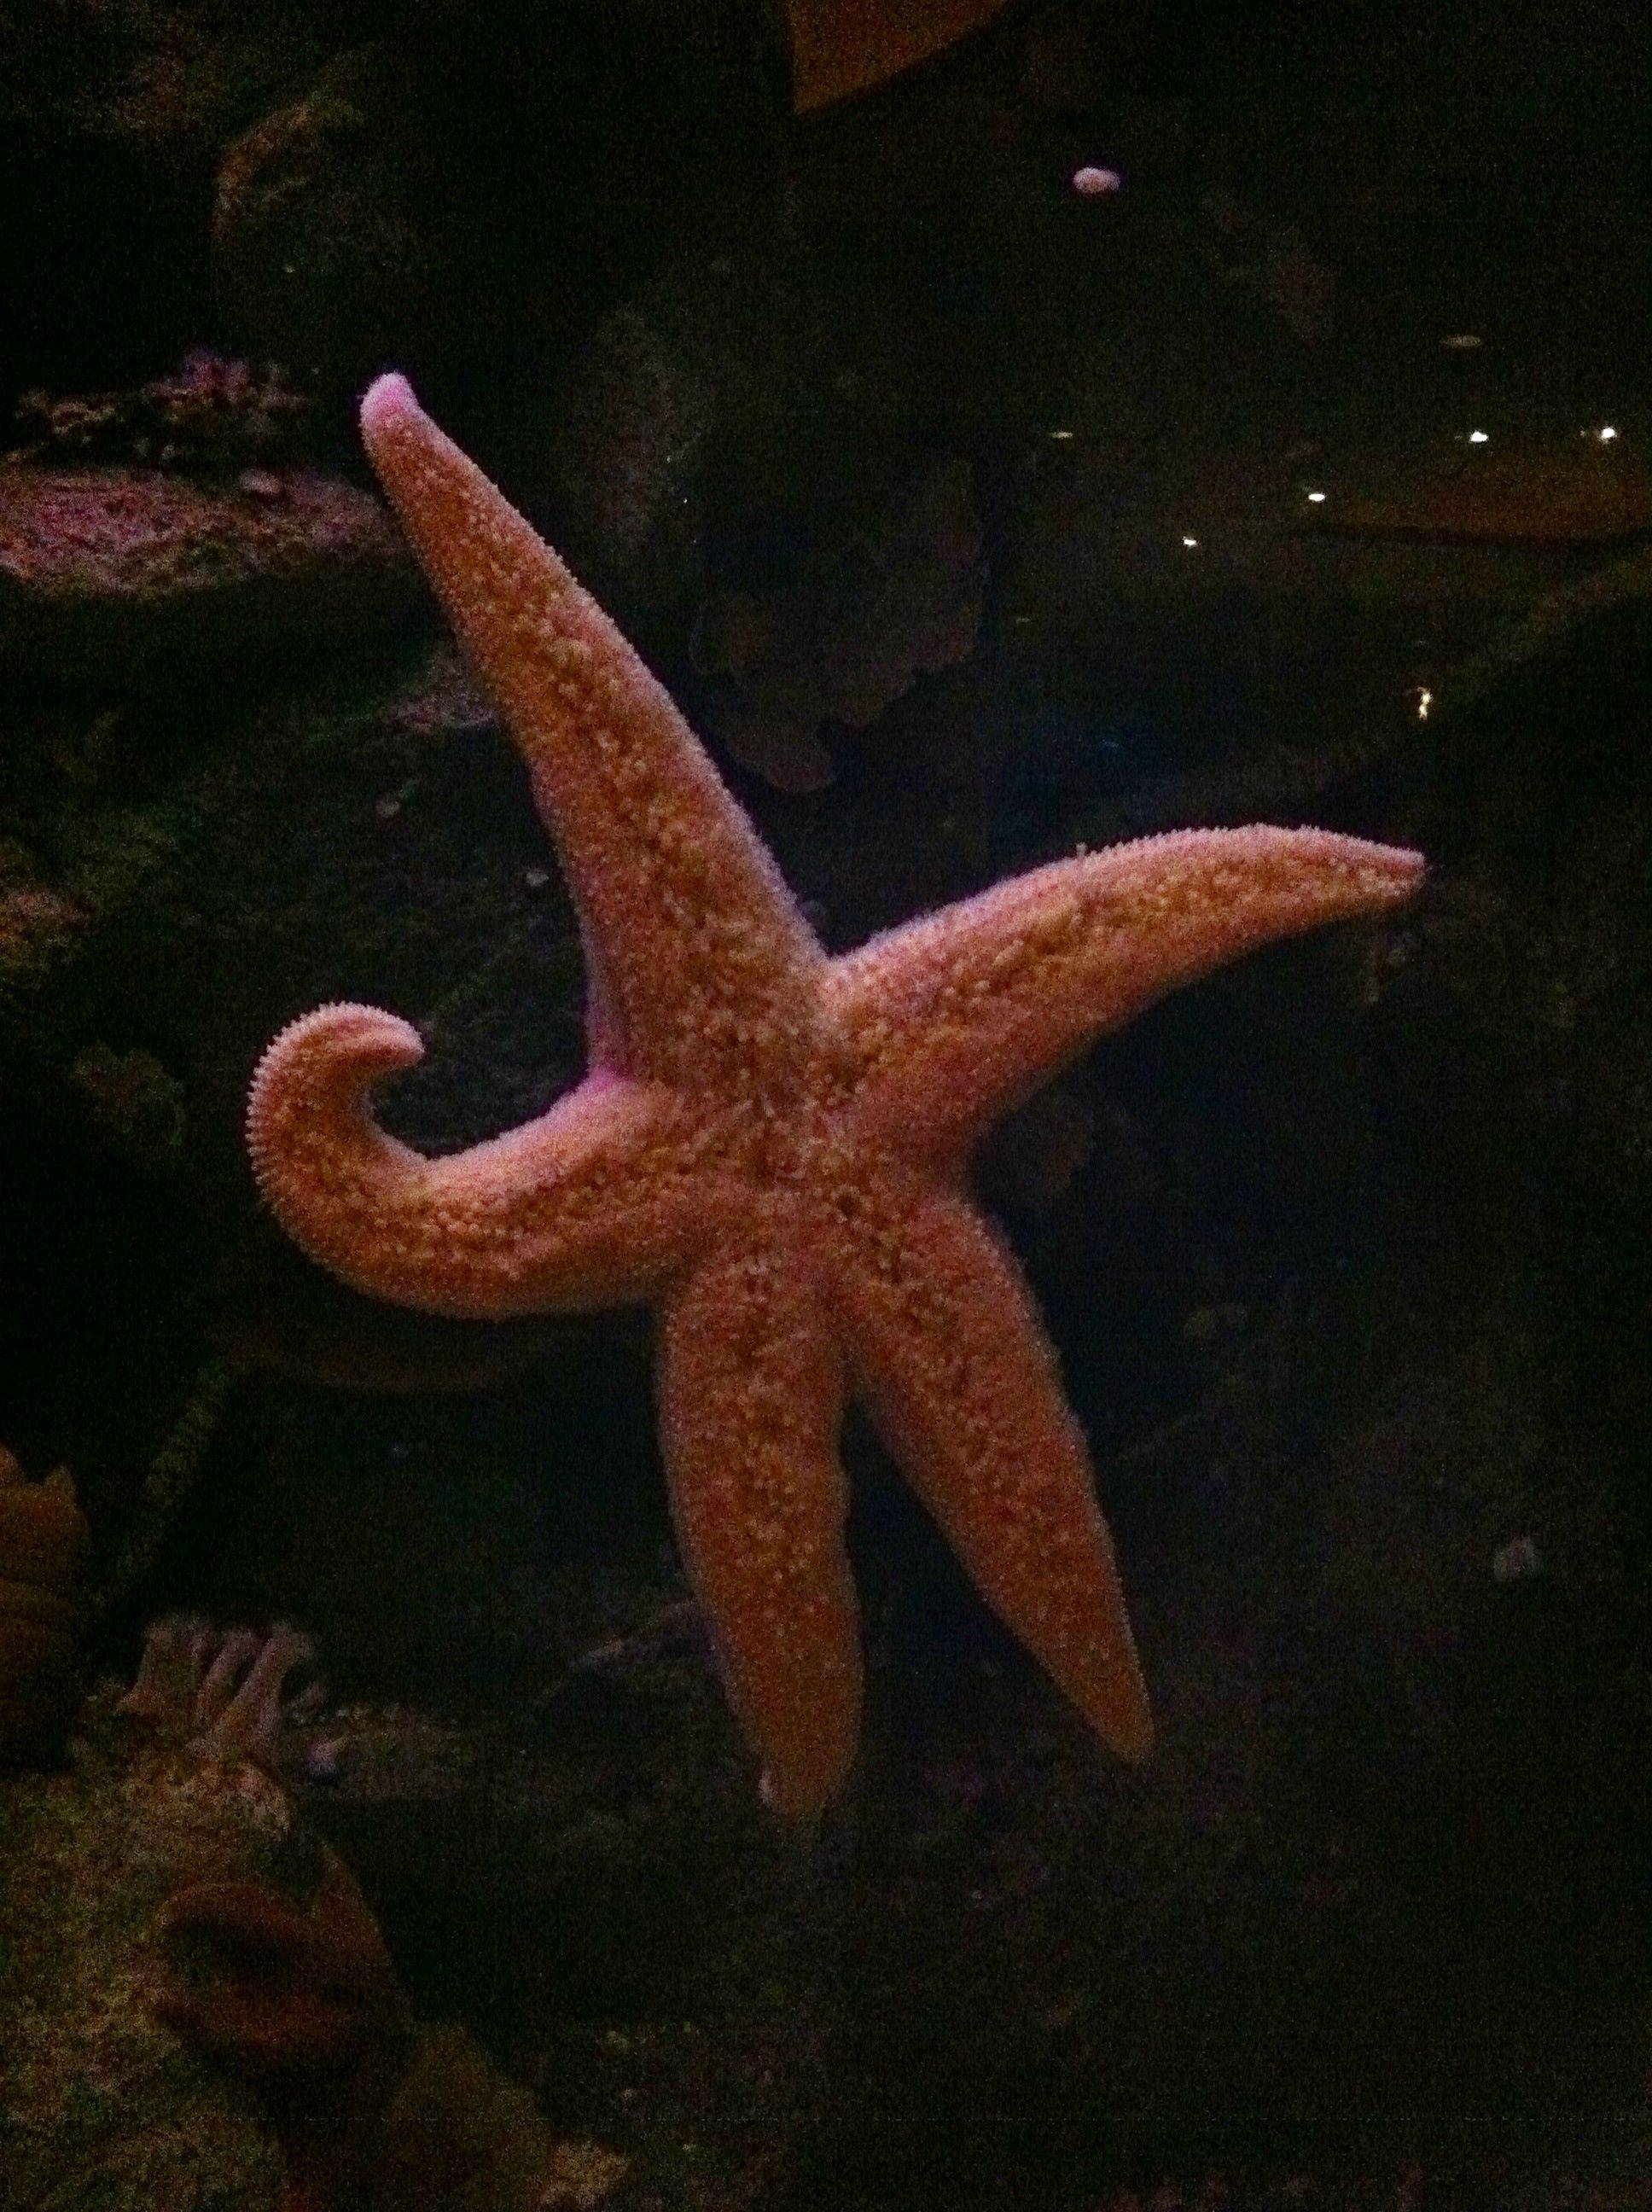 The starfish bearing a striking resemblance to Usain Bolt...